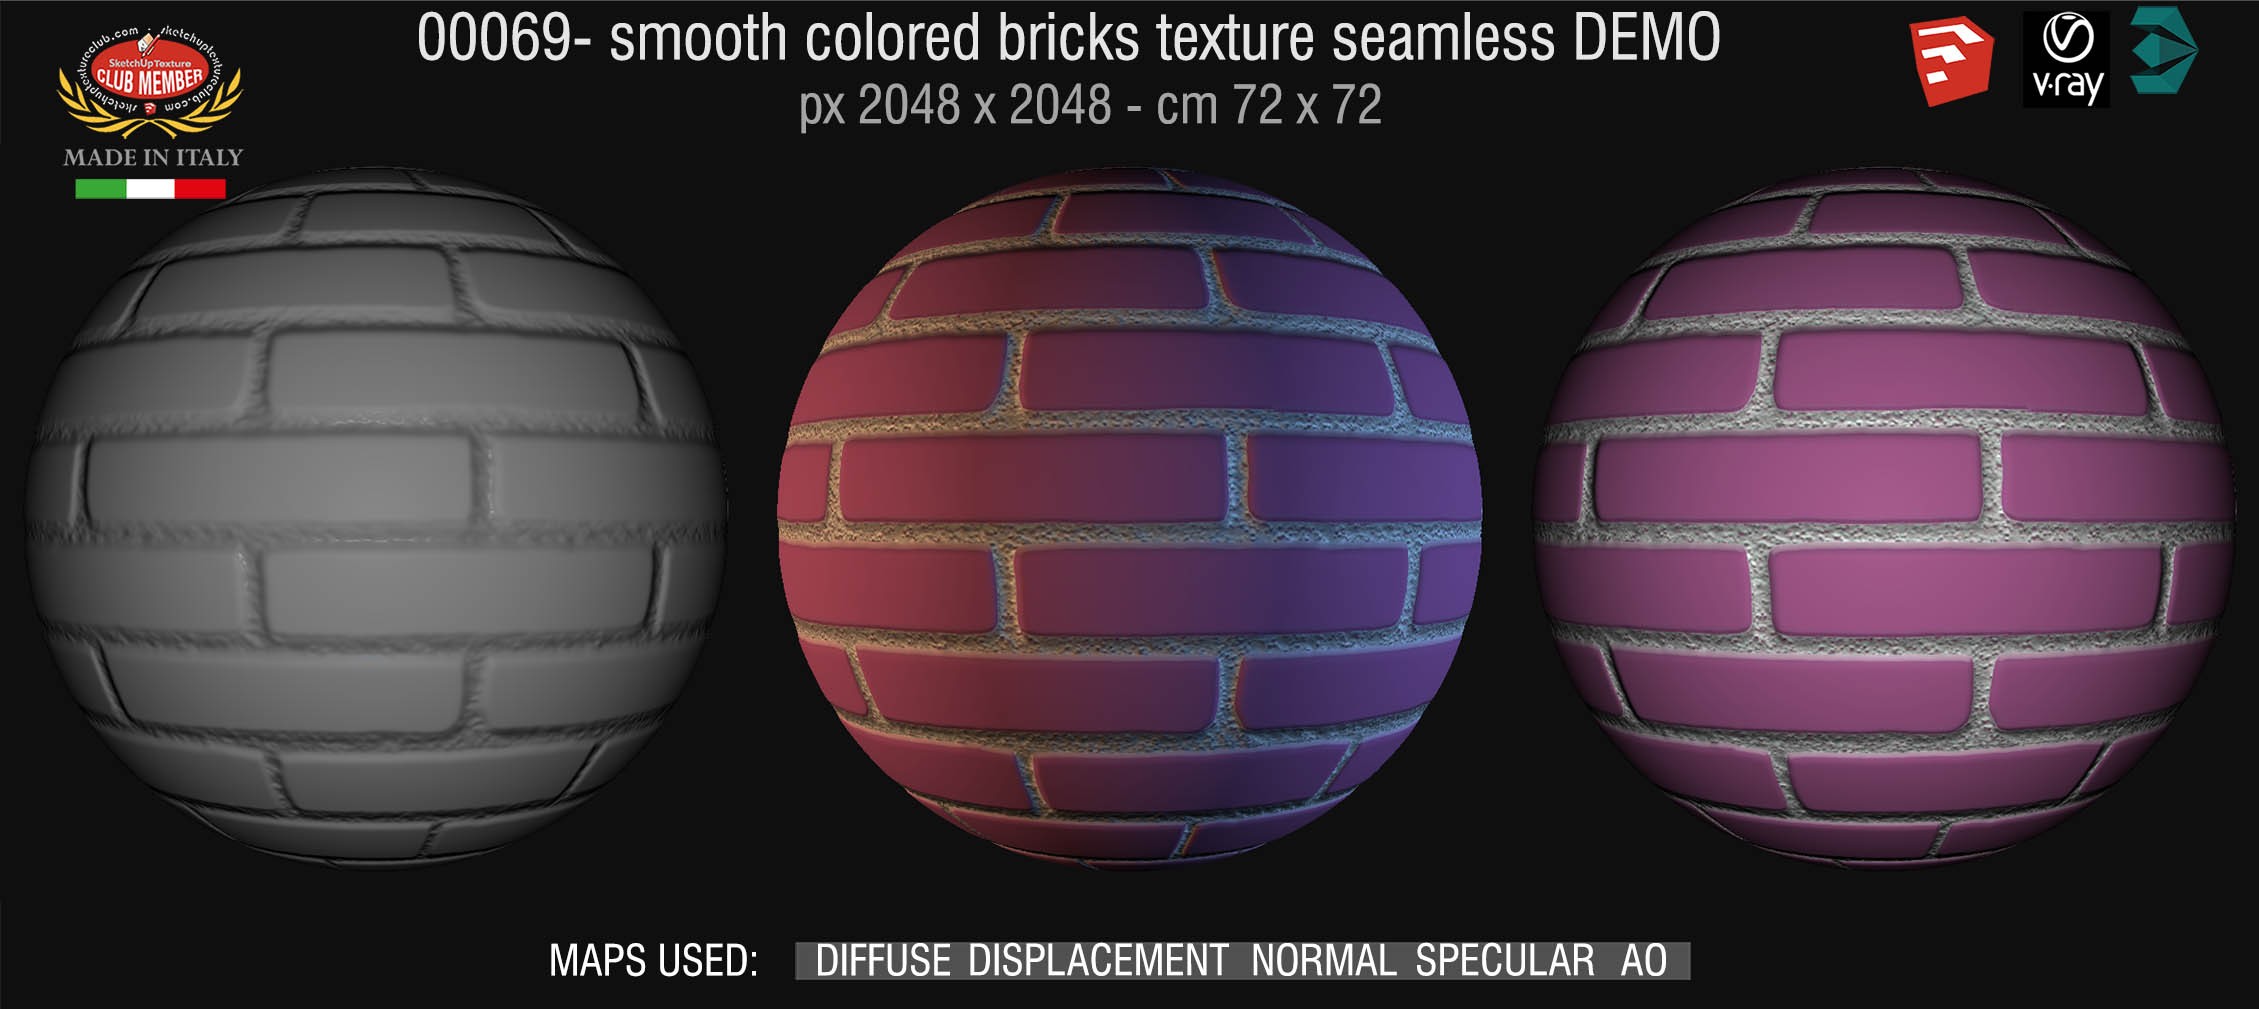 00069 smooth colored bricks texture seamless + maps DEMO